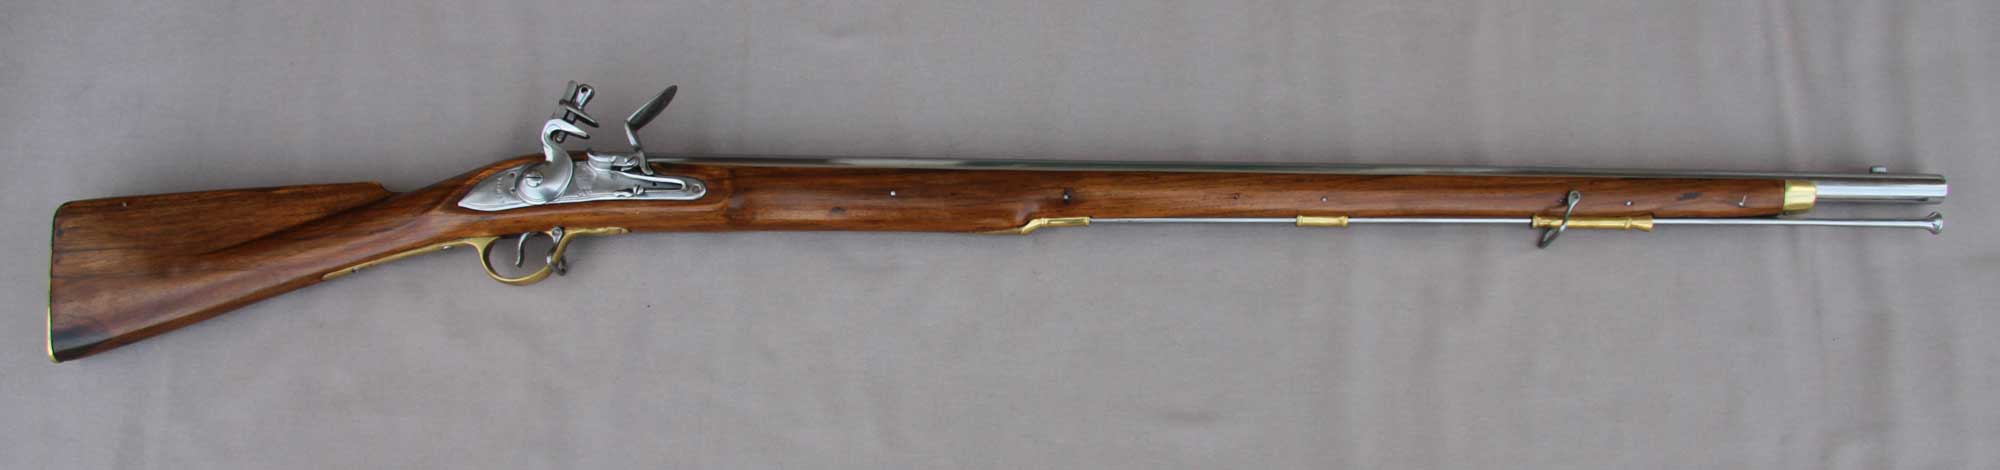 British, India pattern musket